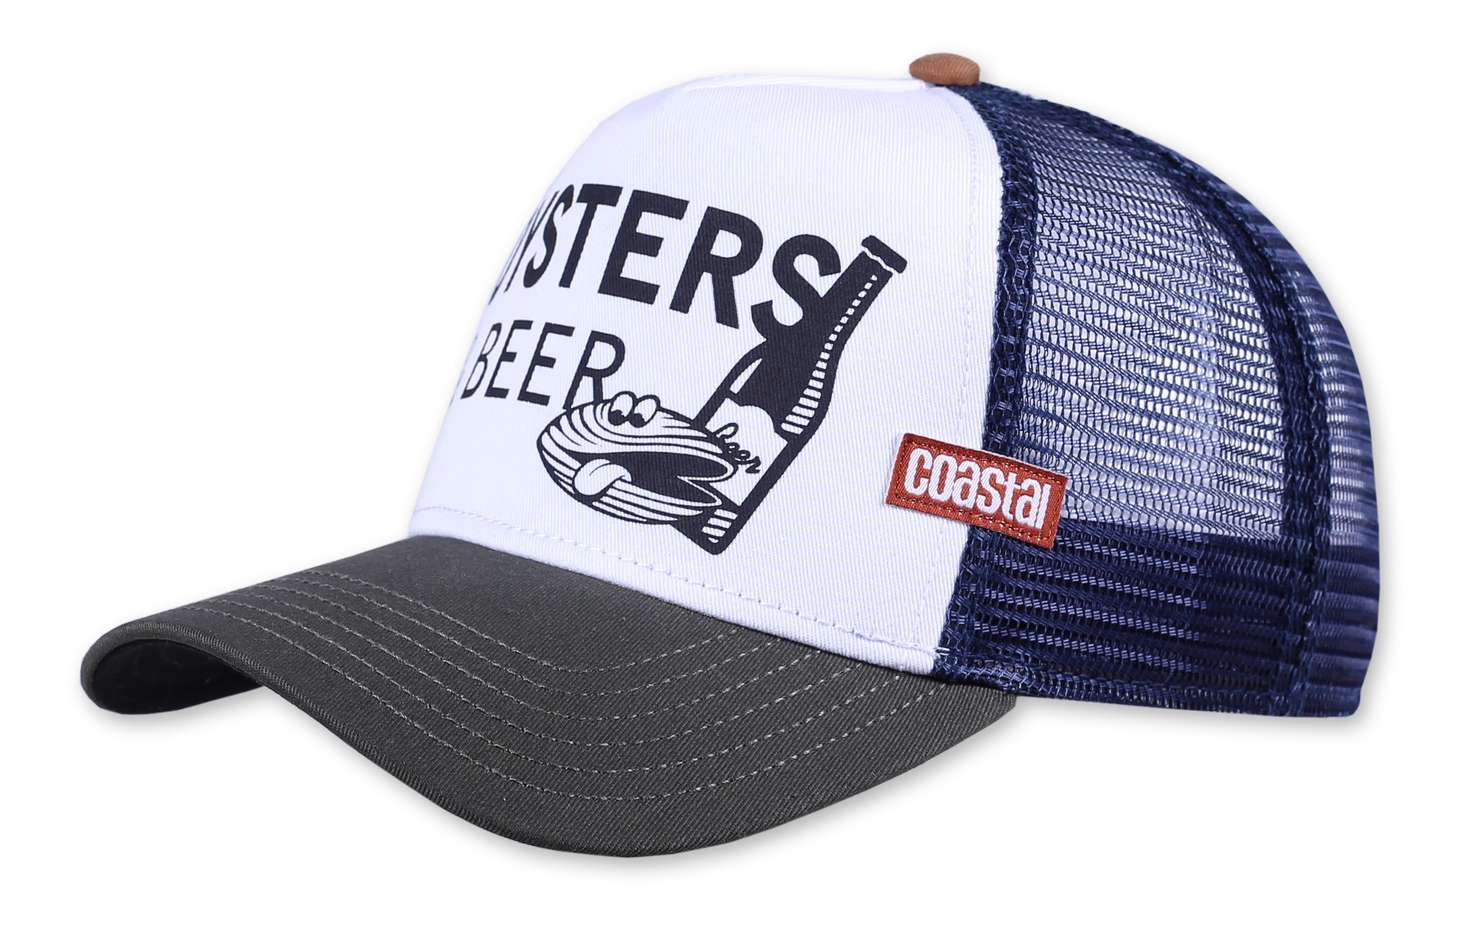 Coastal - Oysters & Beer Trucker Snapback Cap - Mehrfarbig